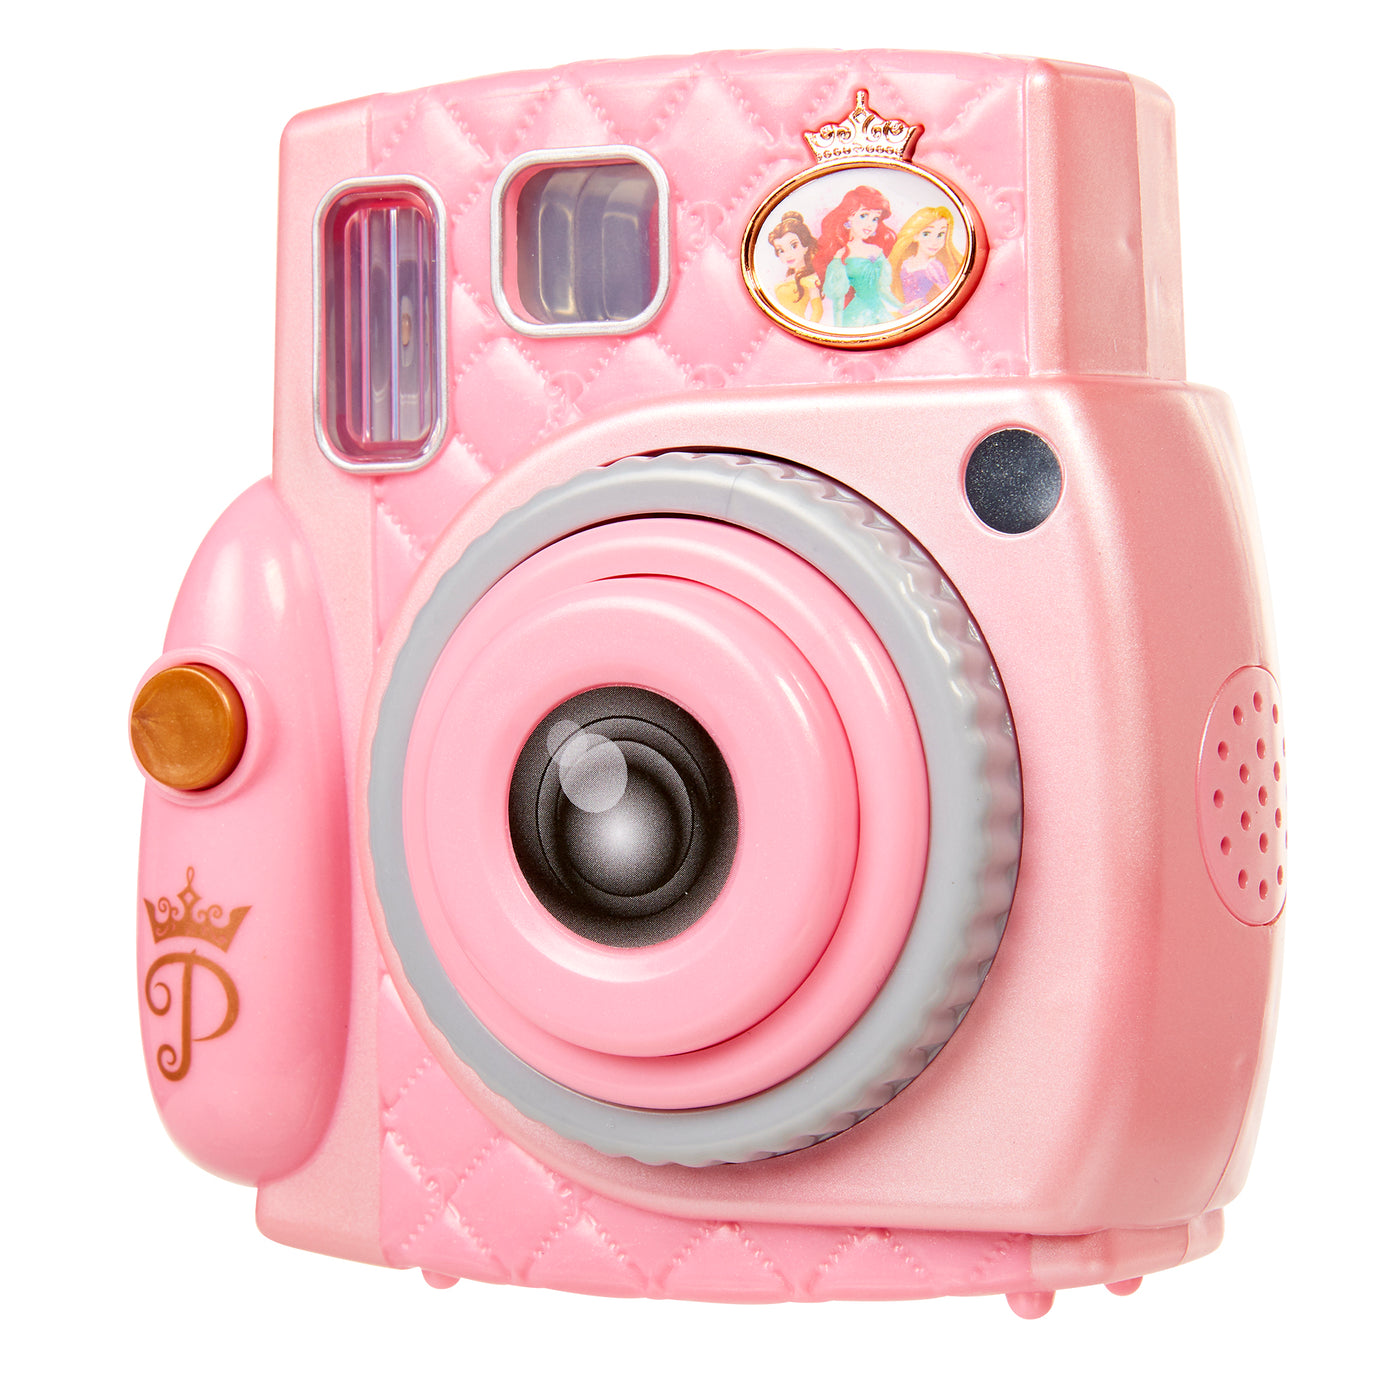 Disney Princess Style Collection Play Camera